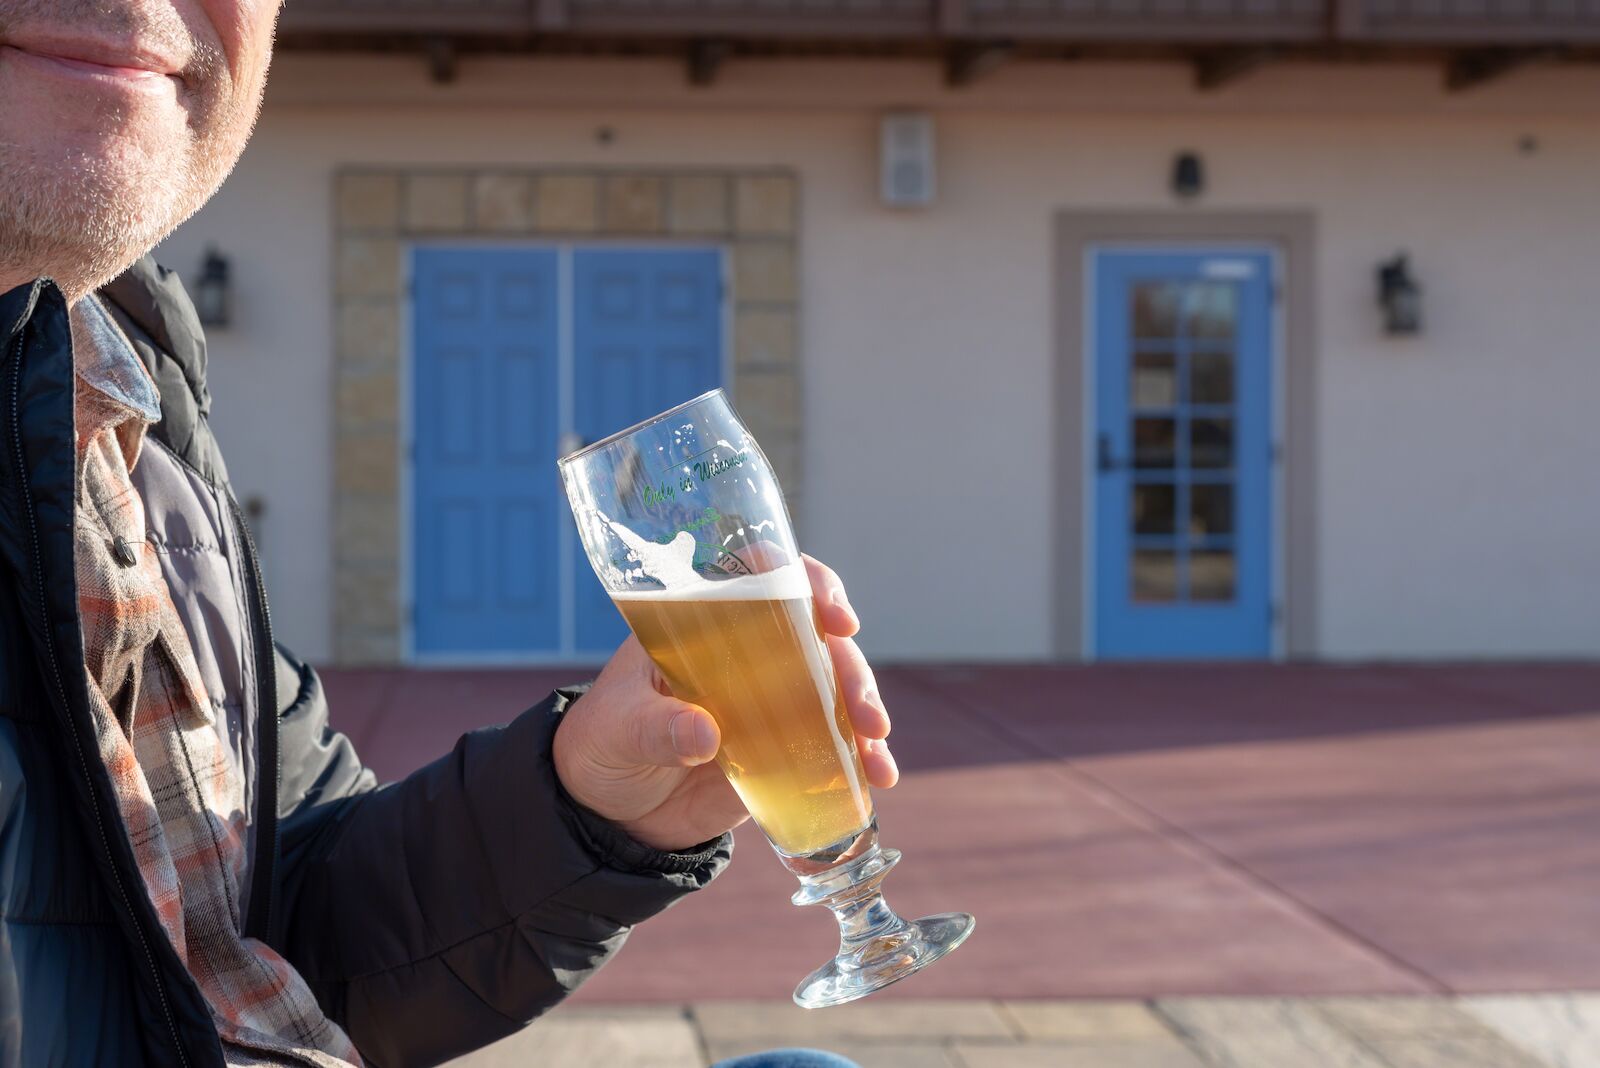 New Glarus, WI/USA - 10-27-2019: Man enjoying a beer at an outdoor beer garden